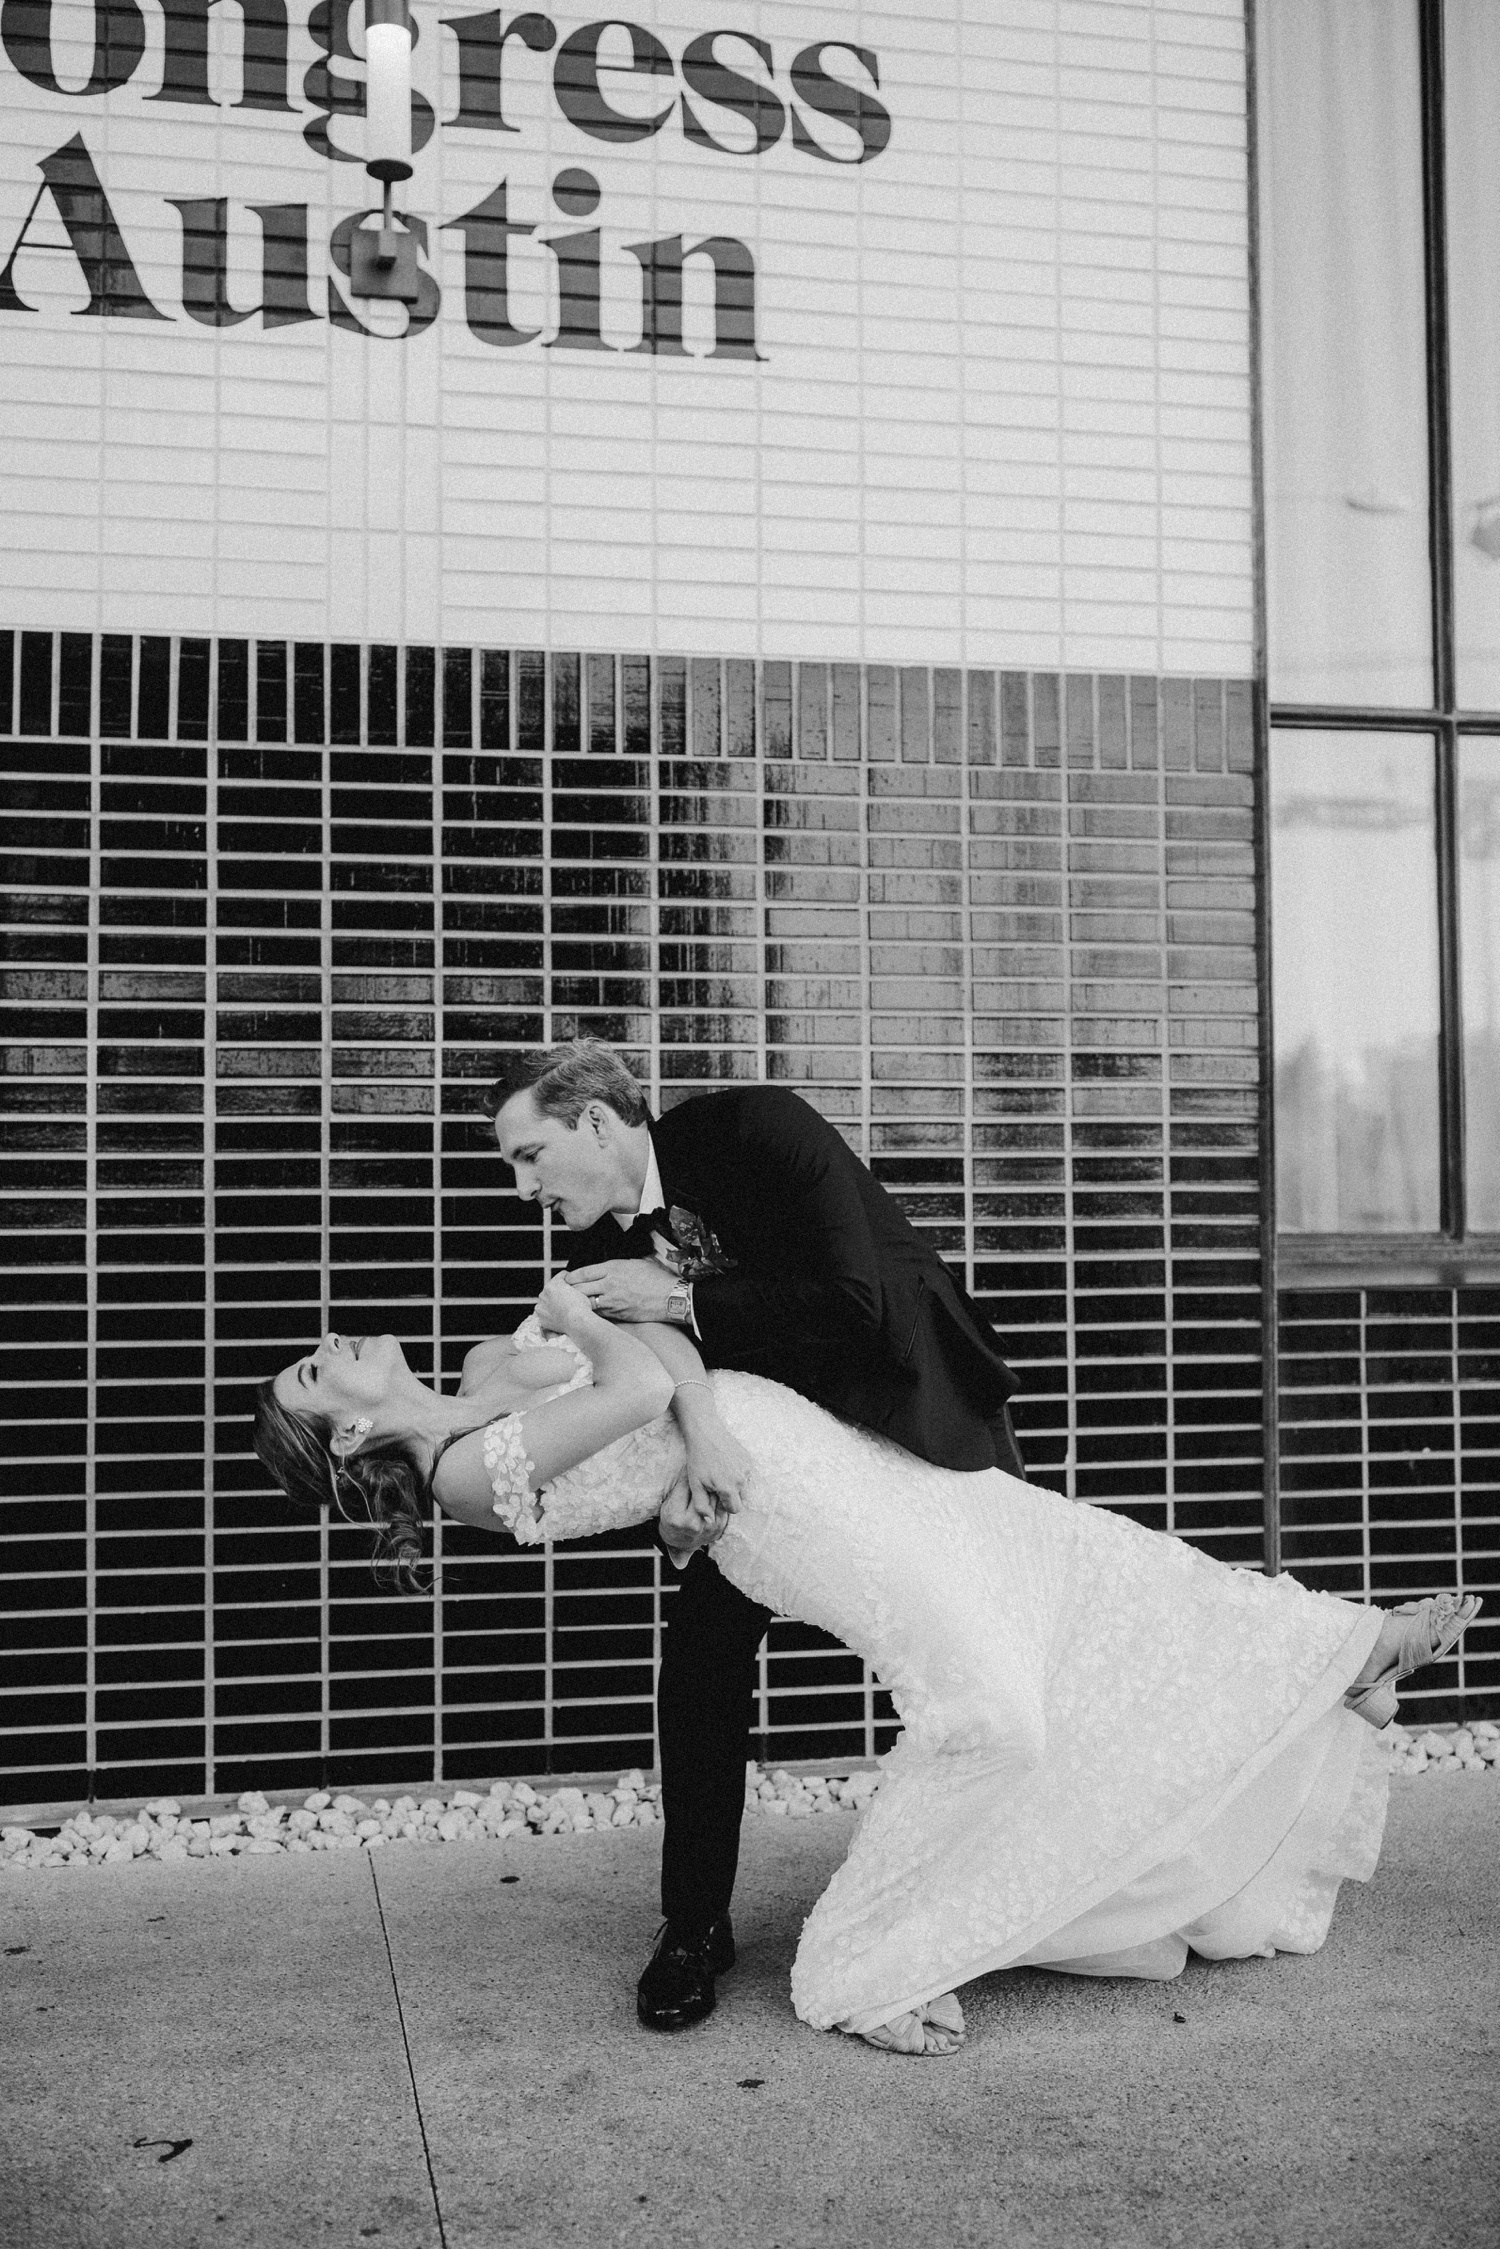 Amber Vickery - Austin, TX Wedding and Elopement Photographer